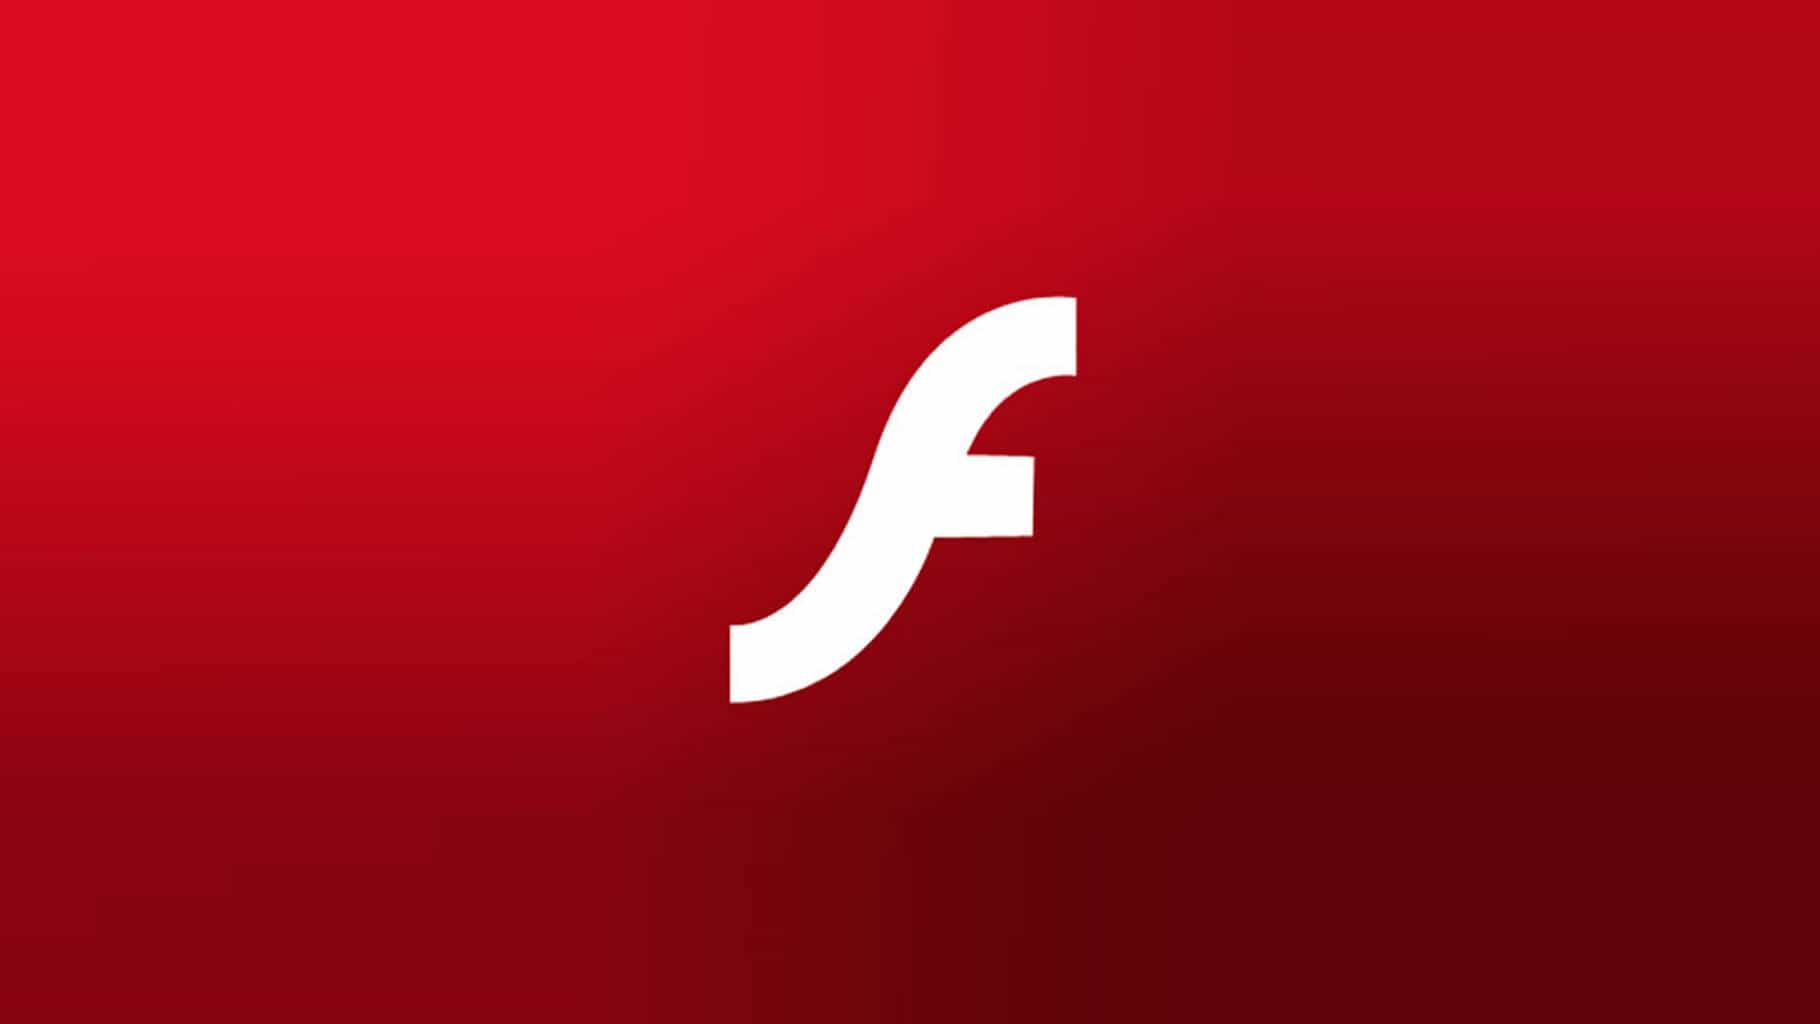 Adobe Flash Player Zero Day